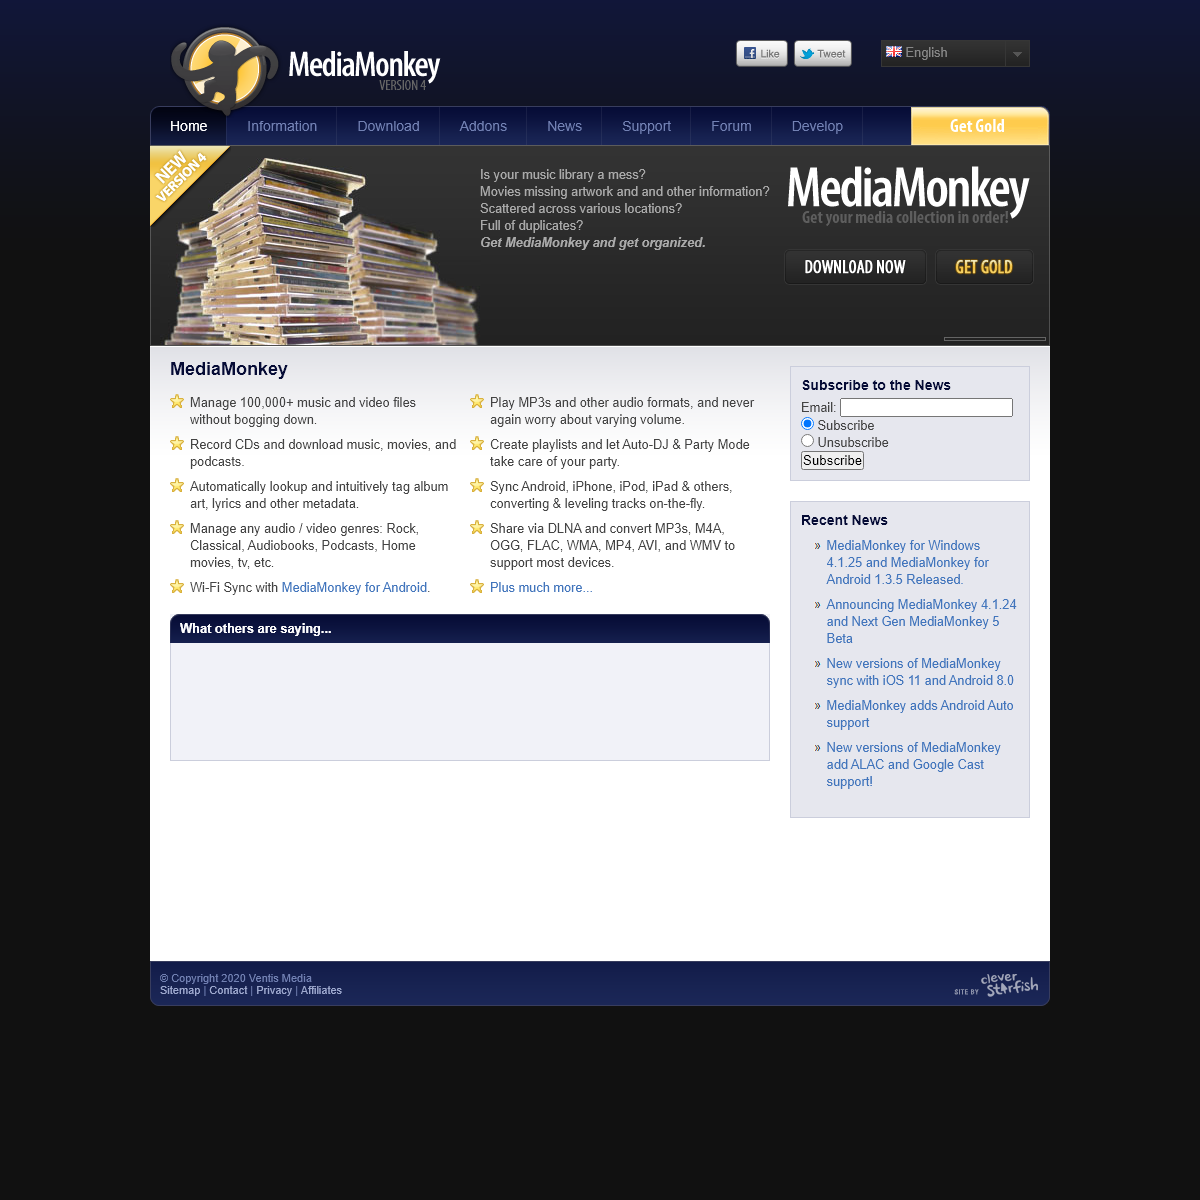 A complete backup of mediamonkey.com